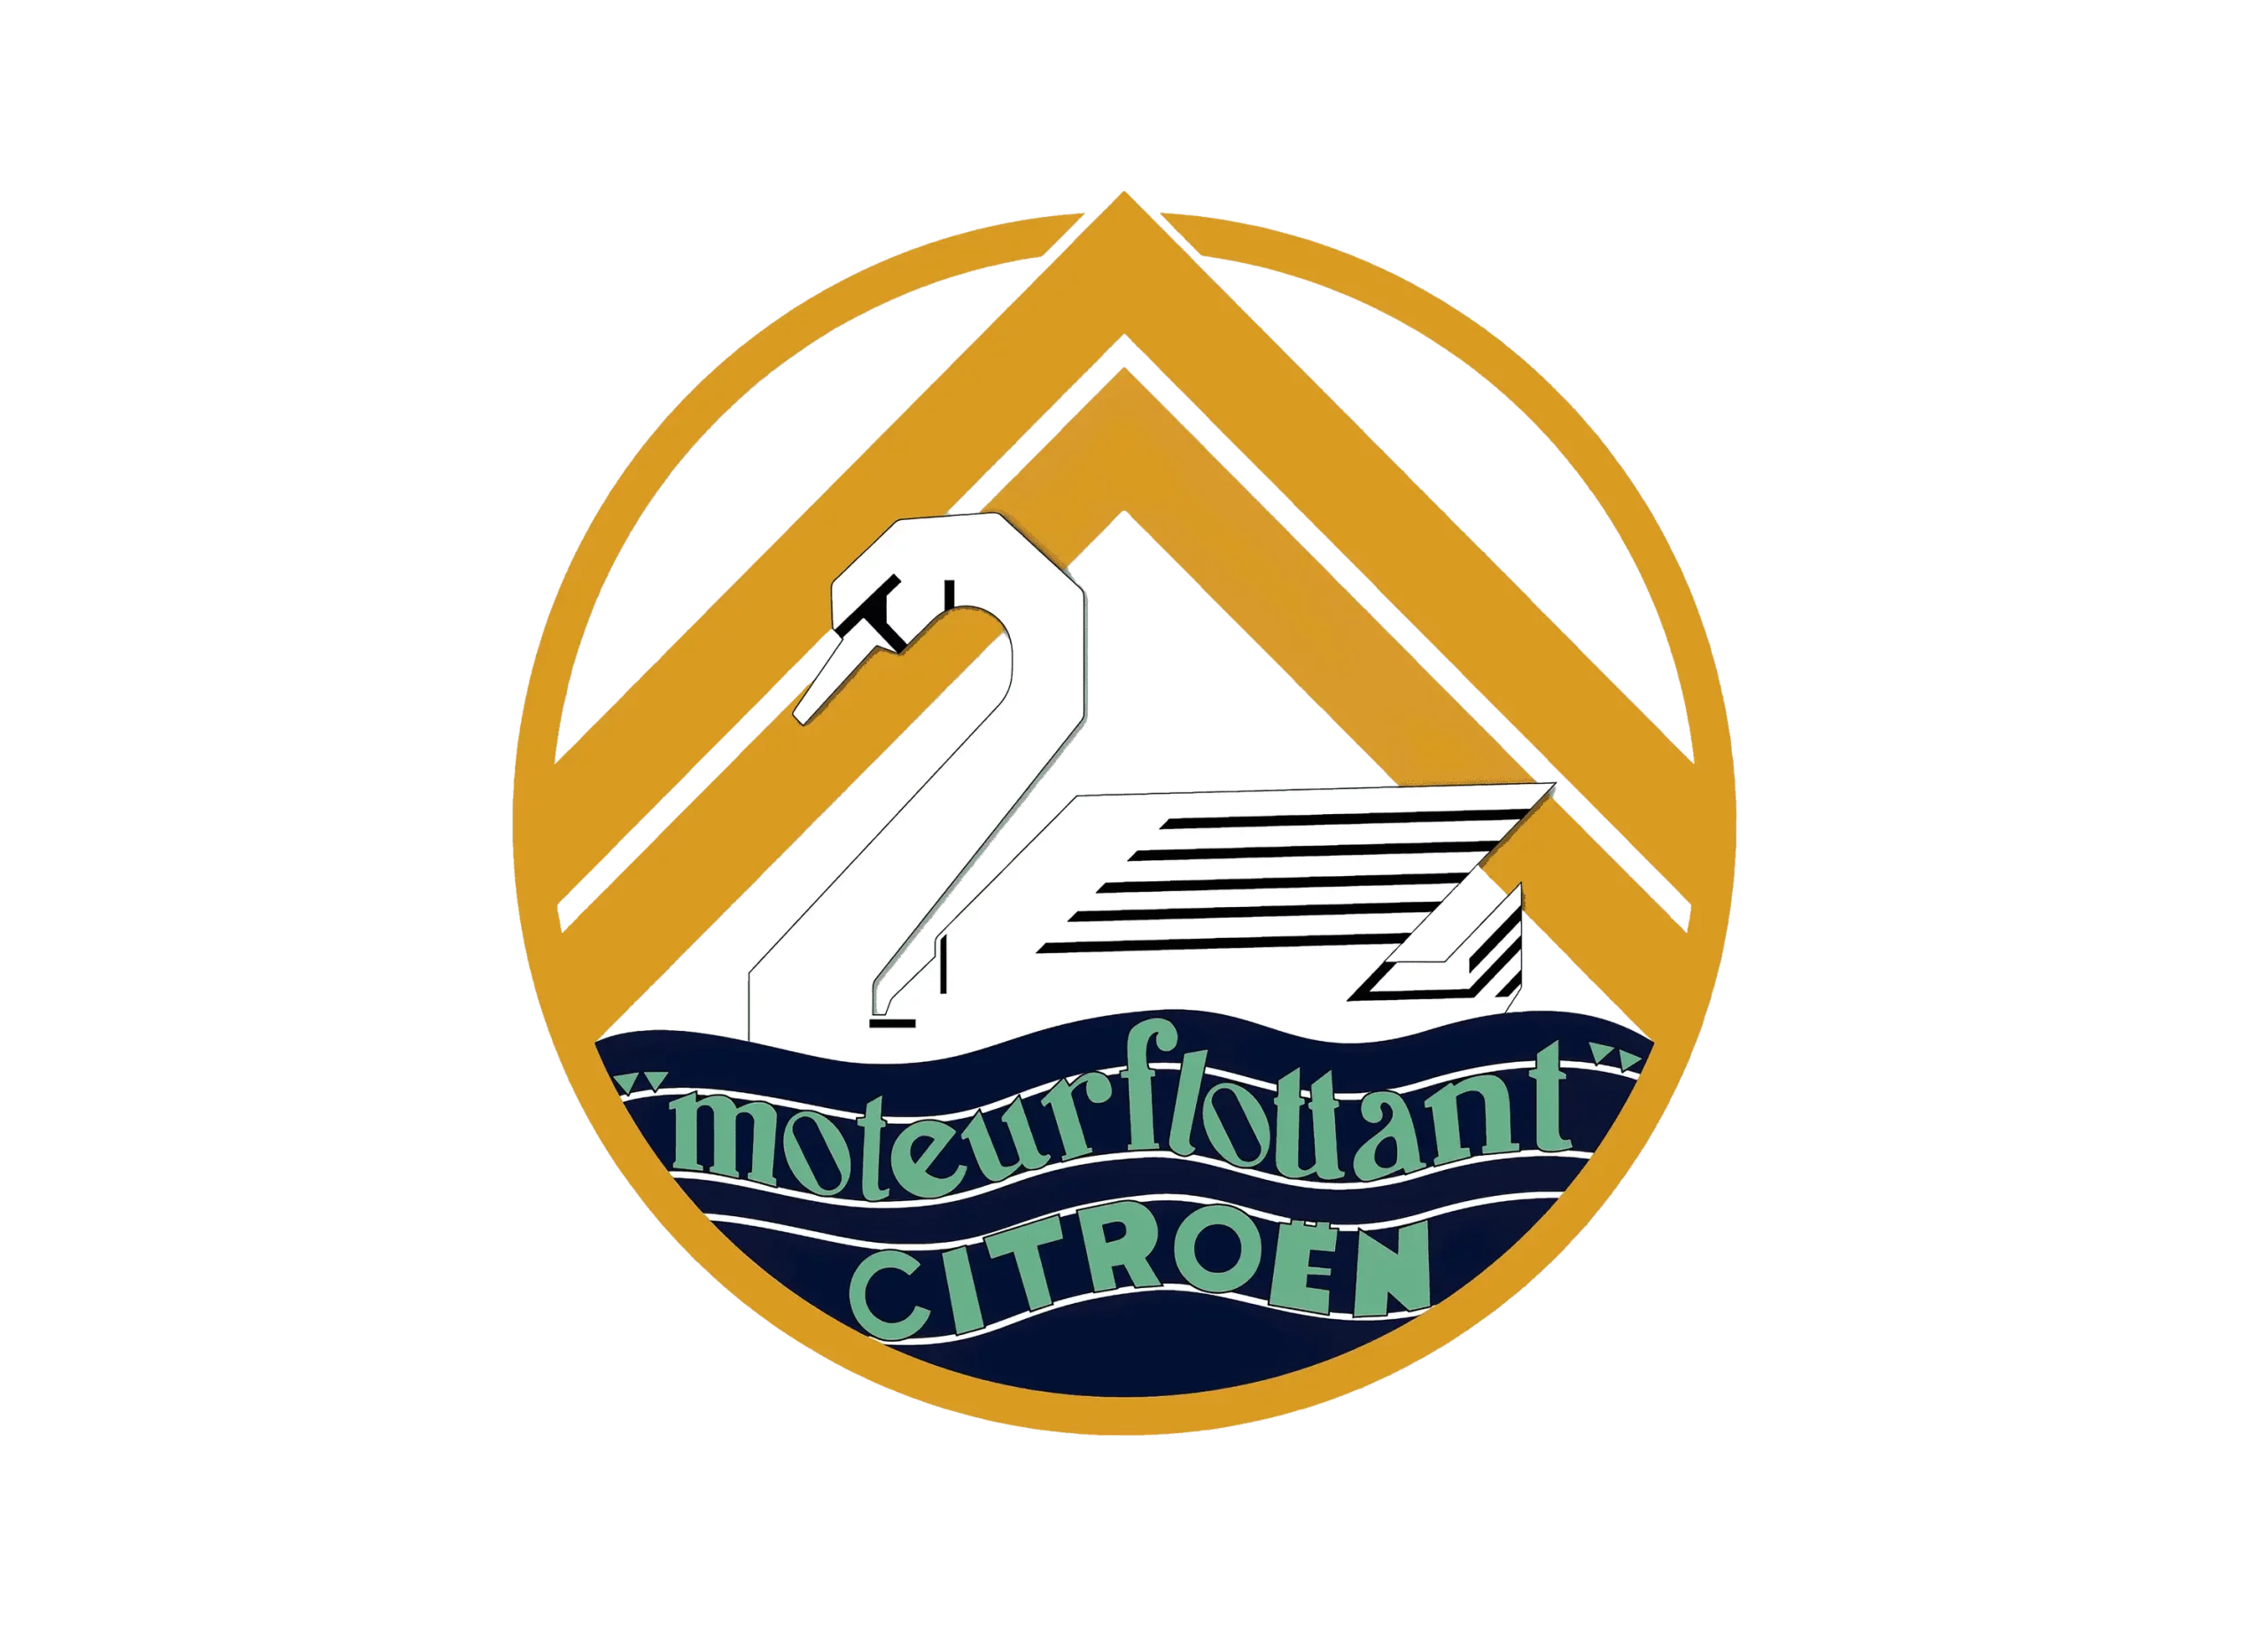 Citroen logo 1932-1935